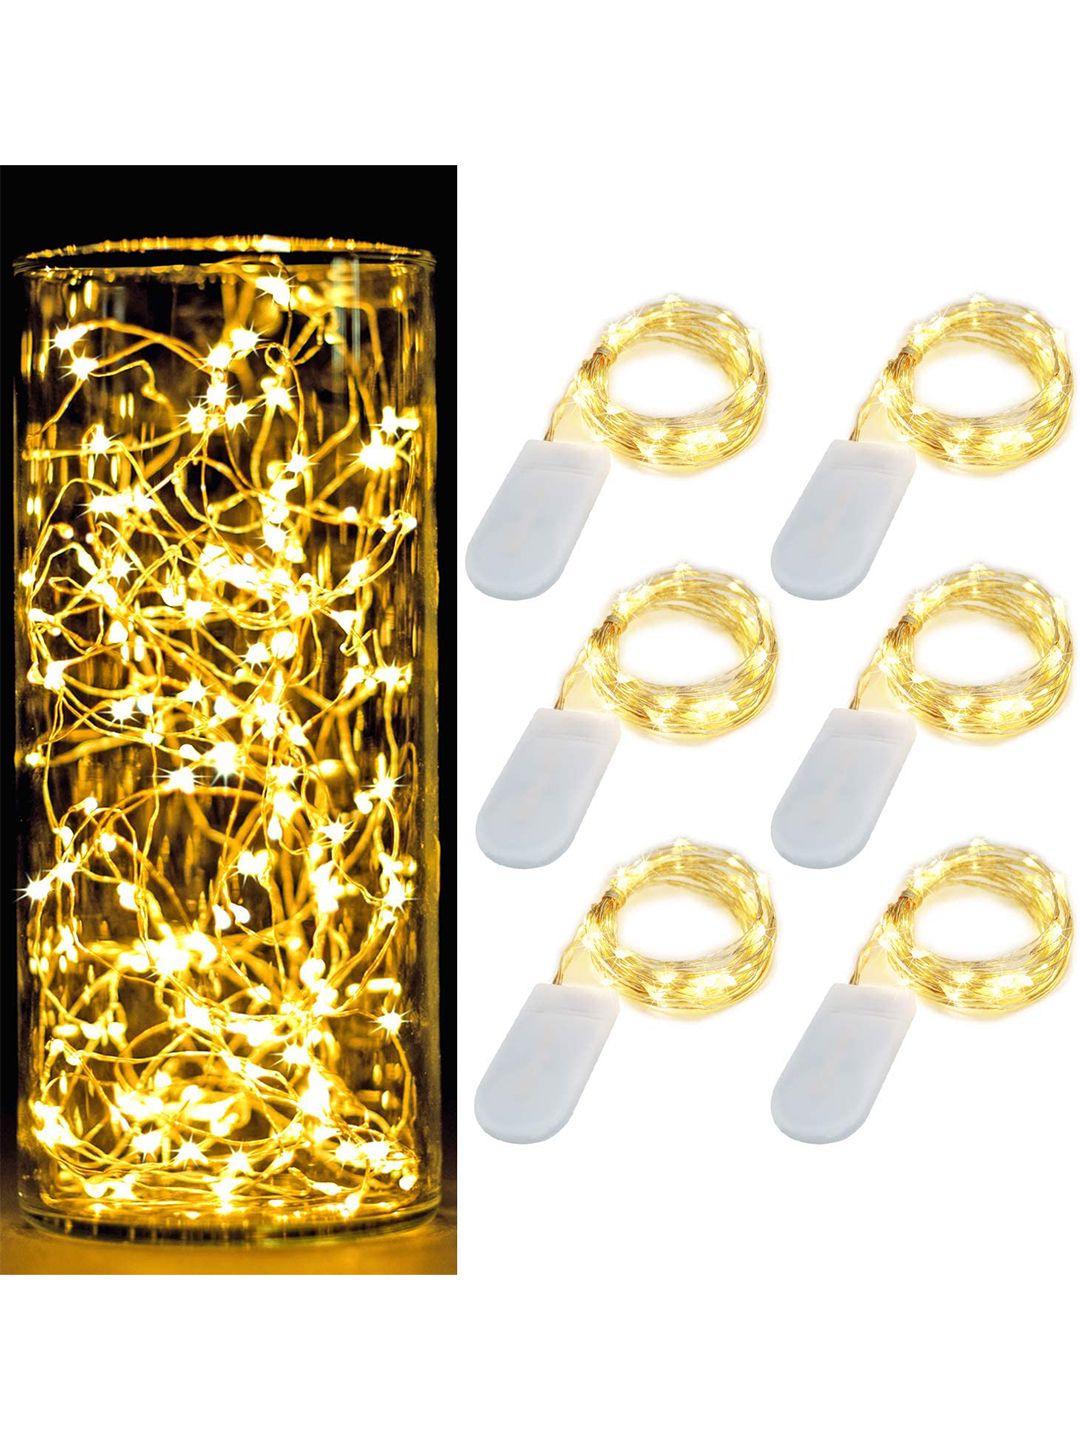 XERGY Pack of 6 Golden 20 LED Starry String Battery Fairy Lights Price in India